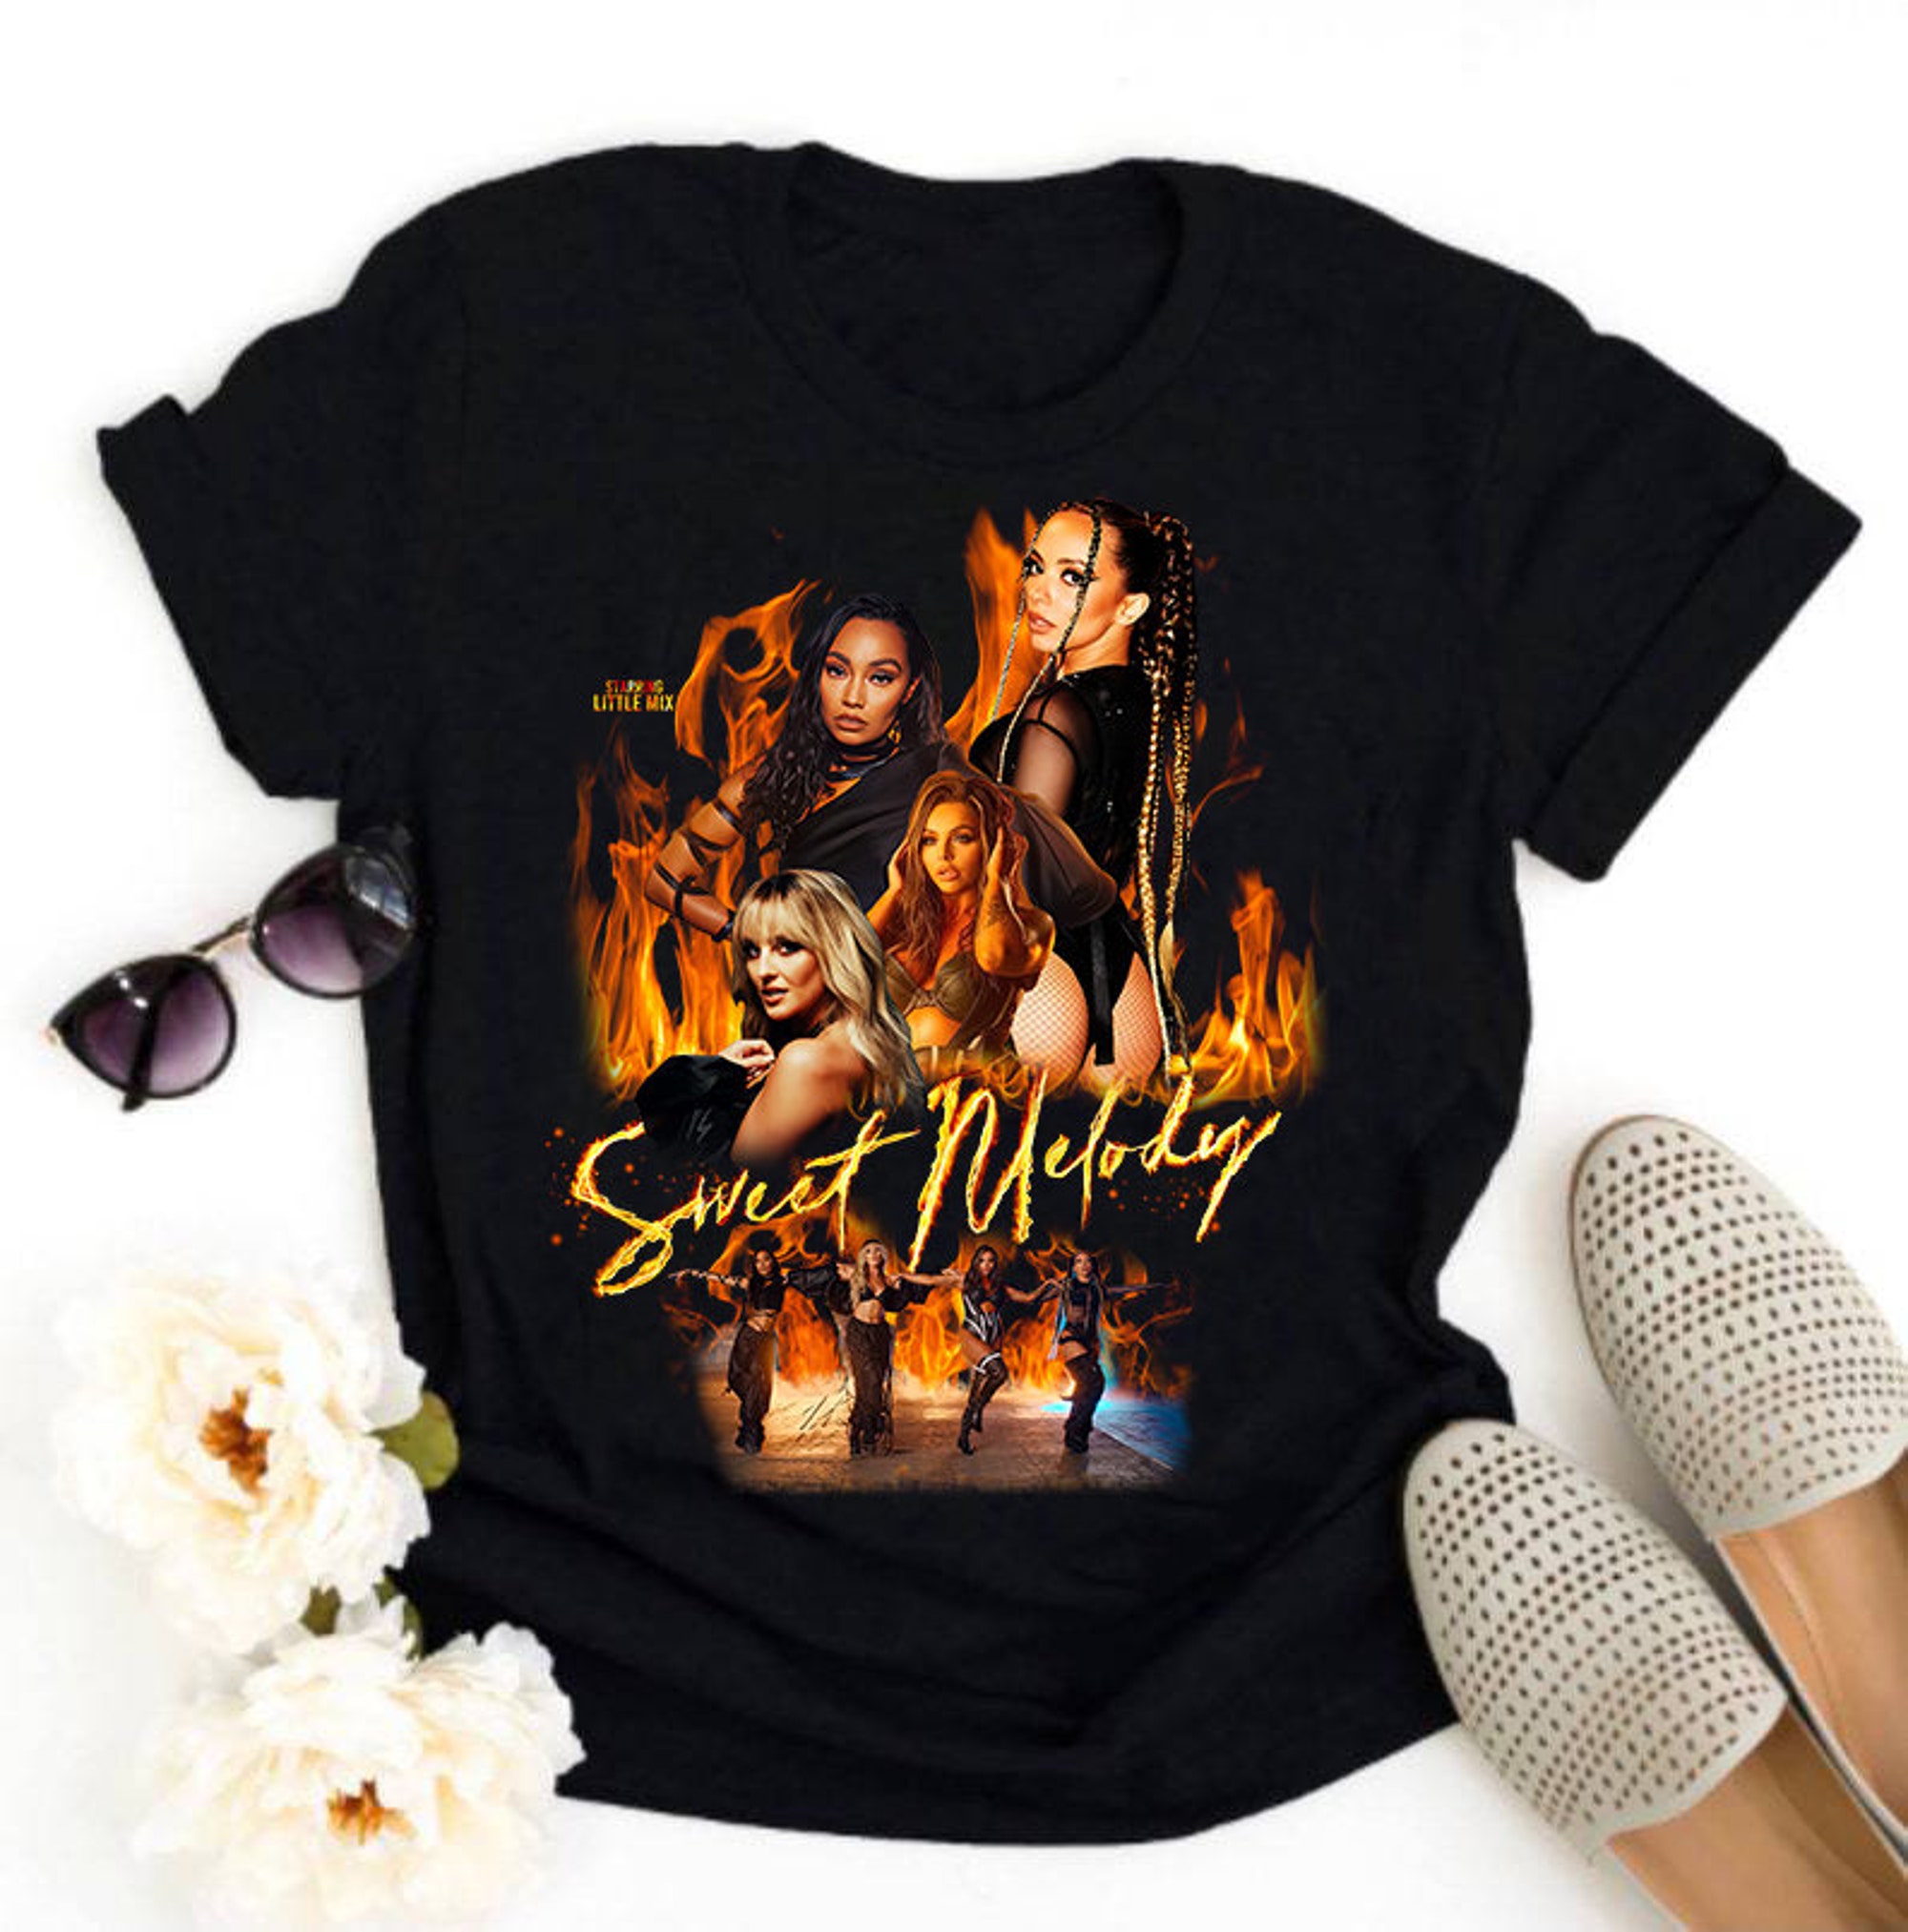 Discover Little Mix Shirt, Sweet Melody Little Mix The Confetti Tour 2022 Shirt, Little Mix, Gift For Little Mix Fans